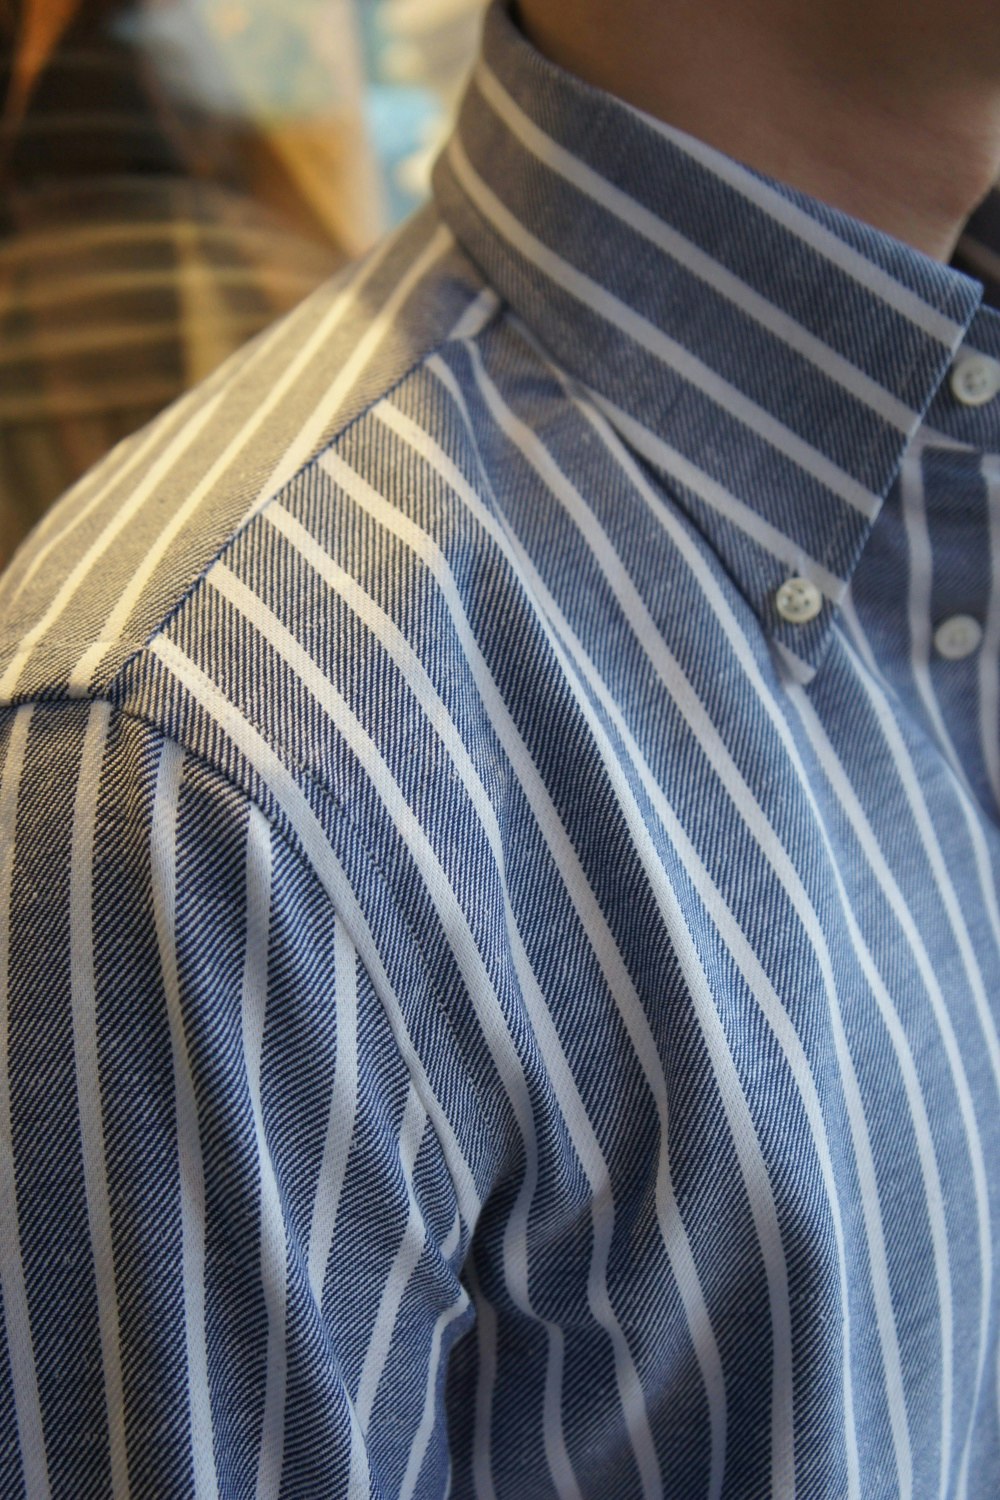 Striped Twill Shirt - Button Down - Navy Blue/White